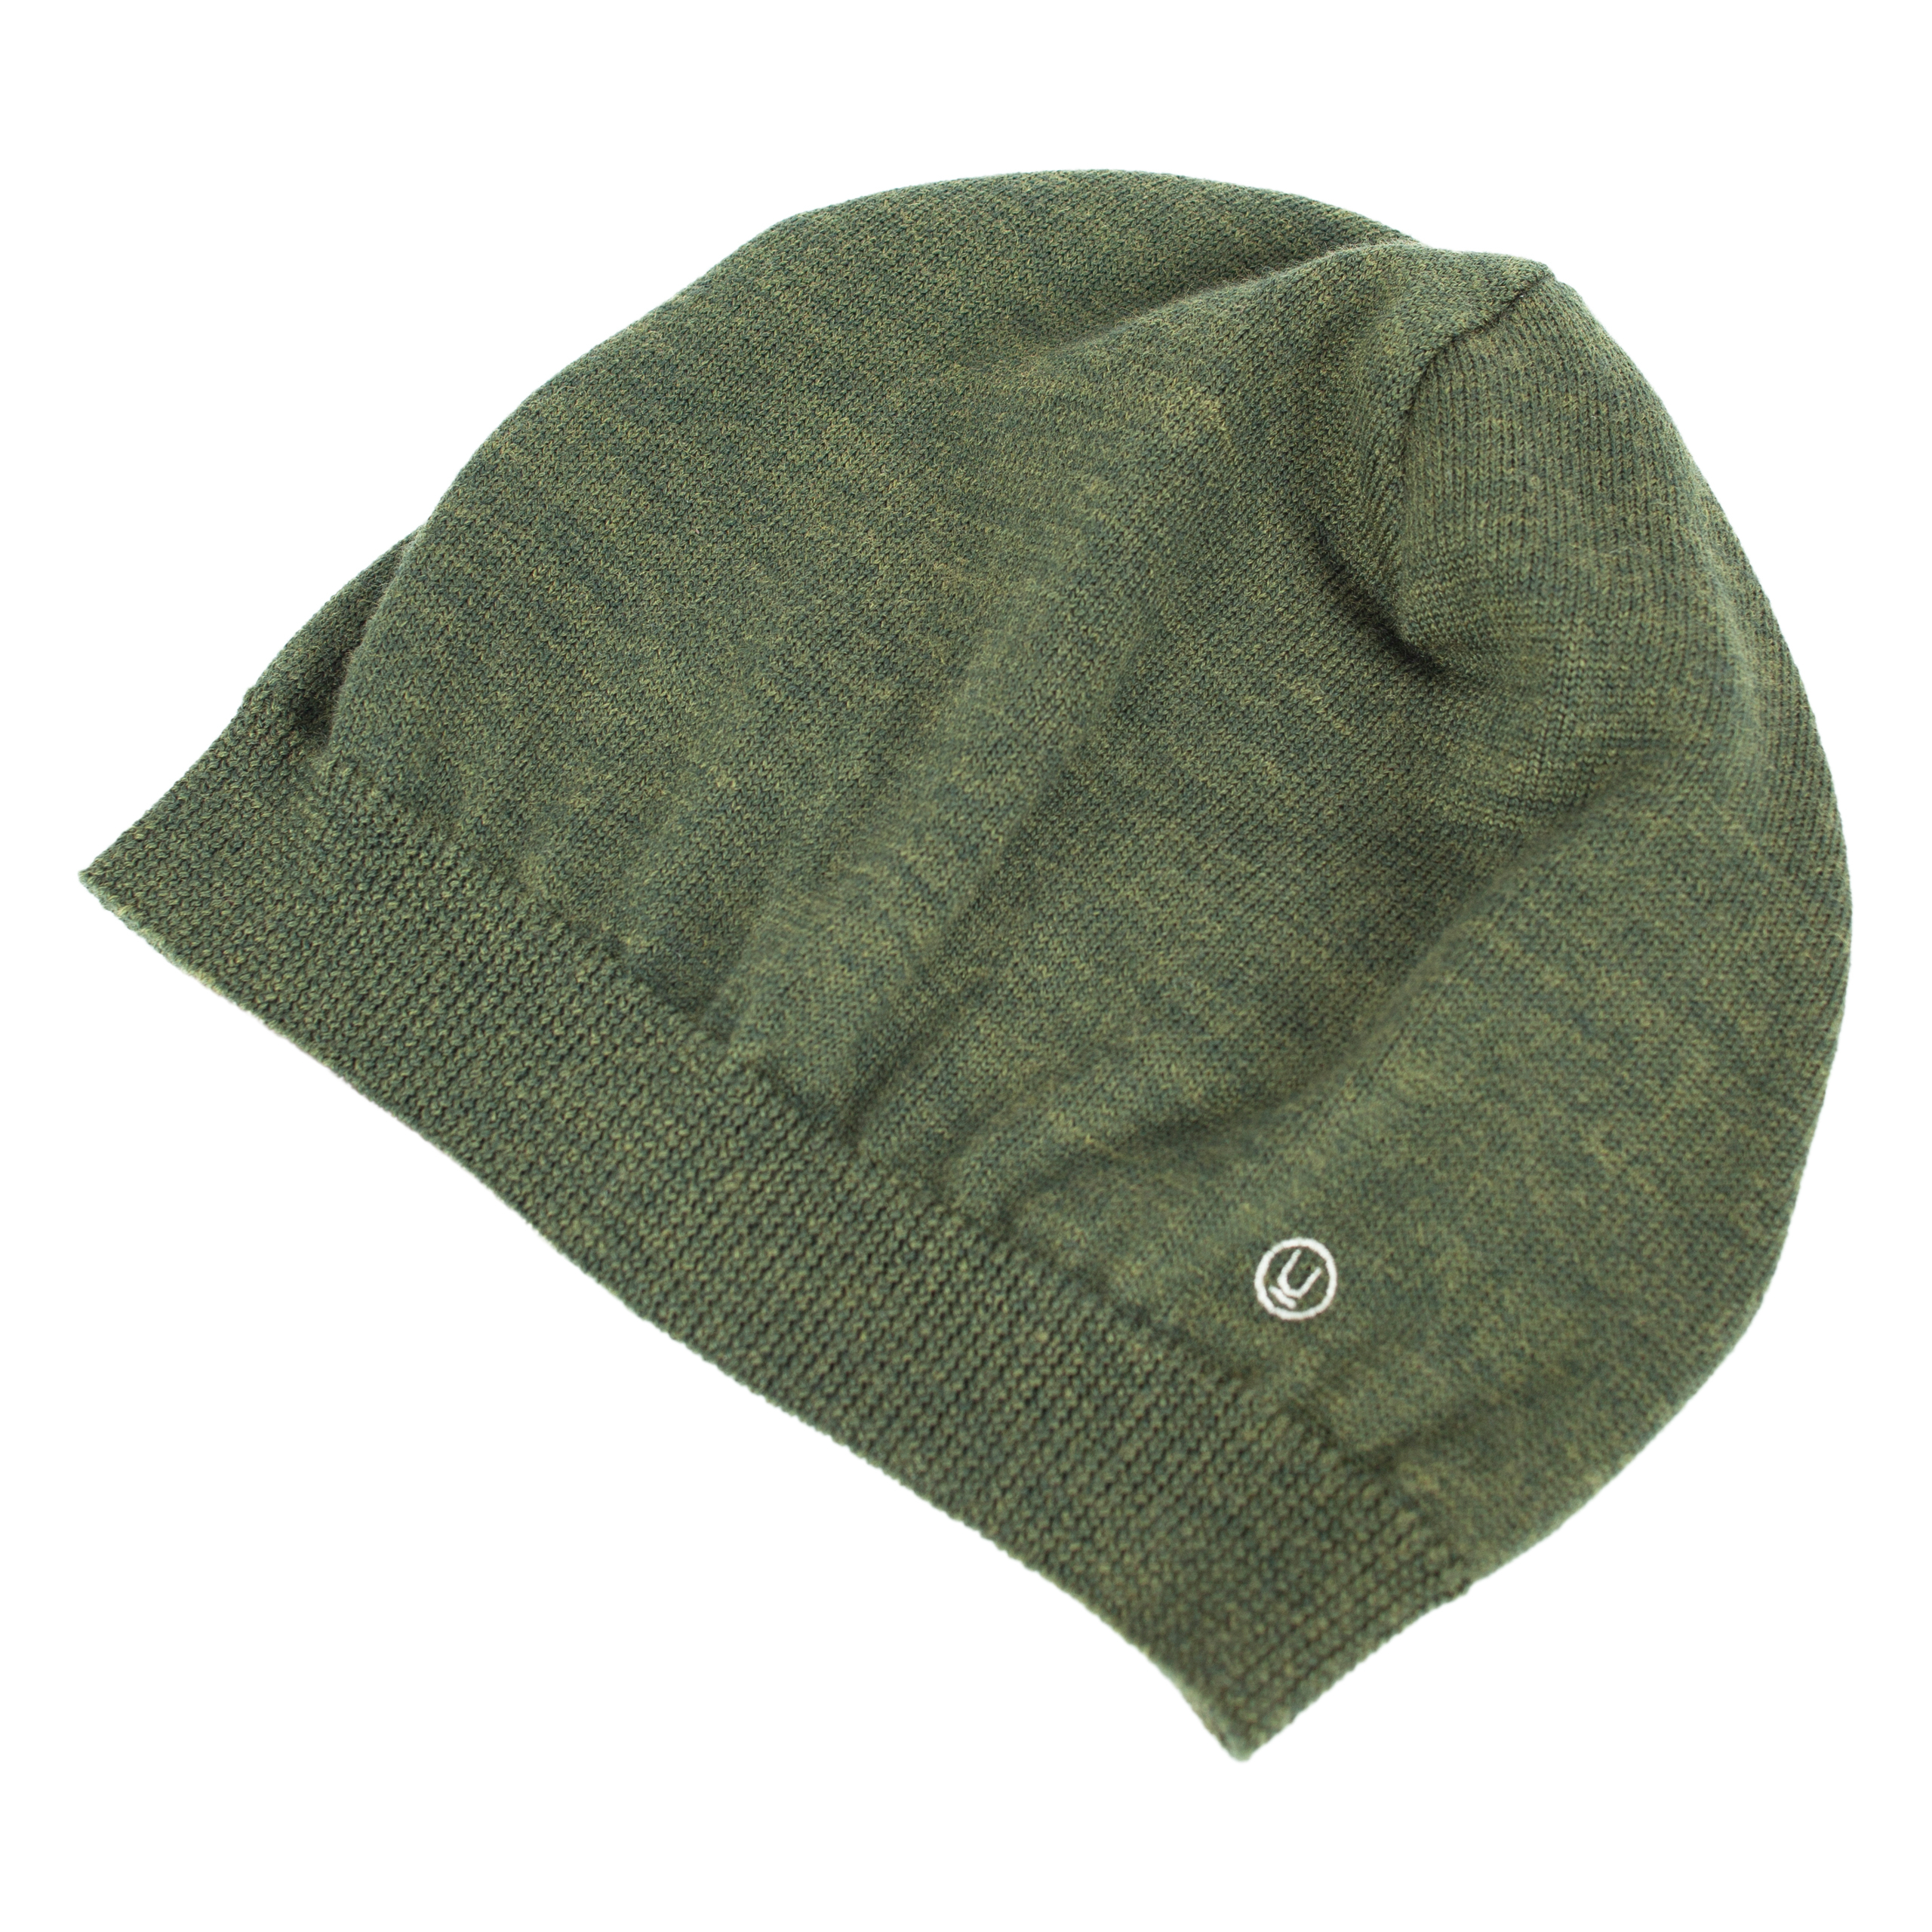 Зеленая шапка с защипом Undercover UC1B4H04/khaki, размер One Size UC1B4H04/khaki - фото 1